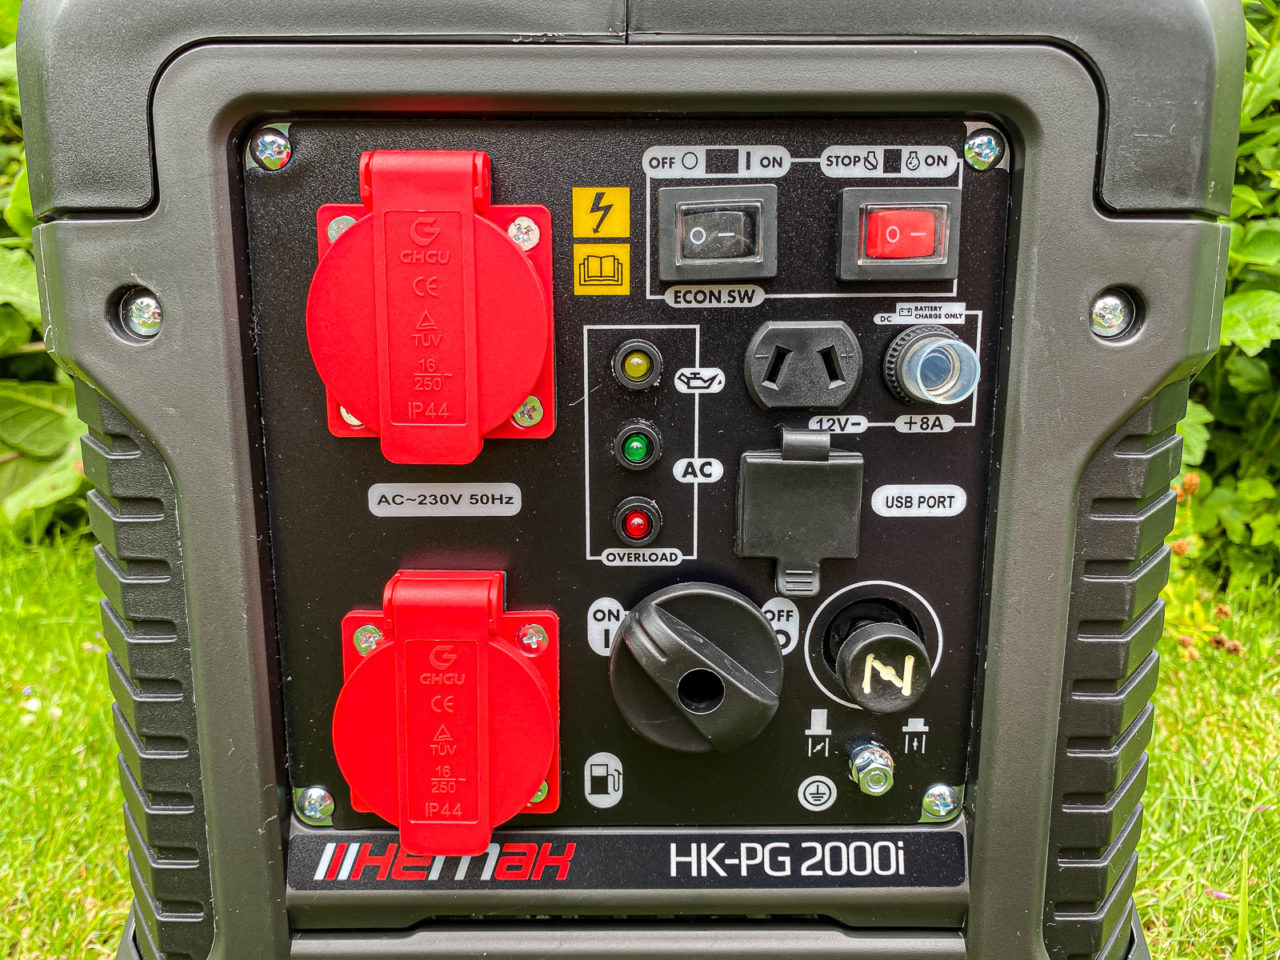 HEMAK HK-PG 2000i Inverter Stromerzeuger Test - Anschlüsse, Steckdosen, Bedienfeld